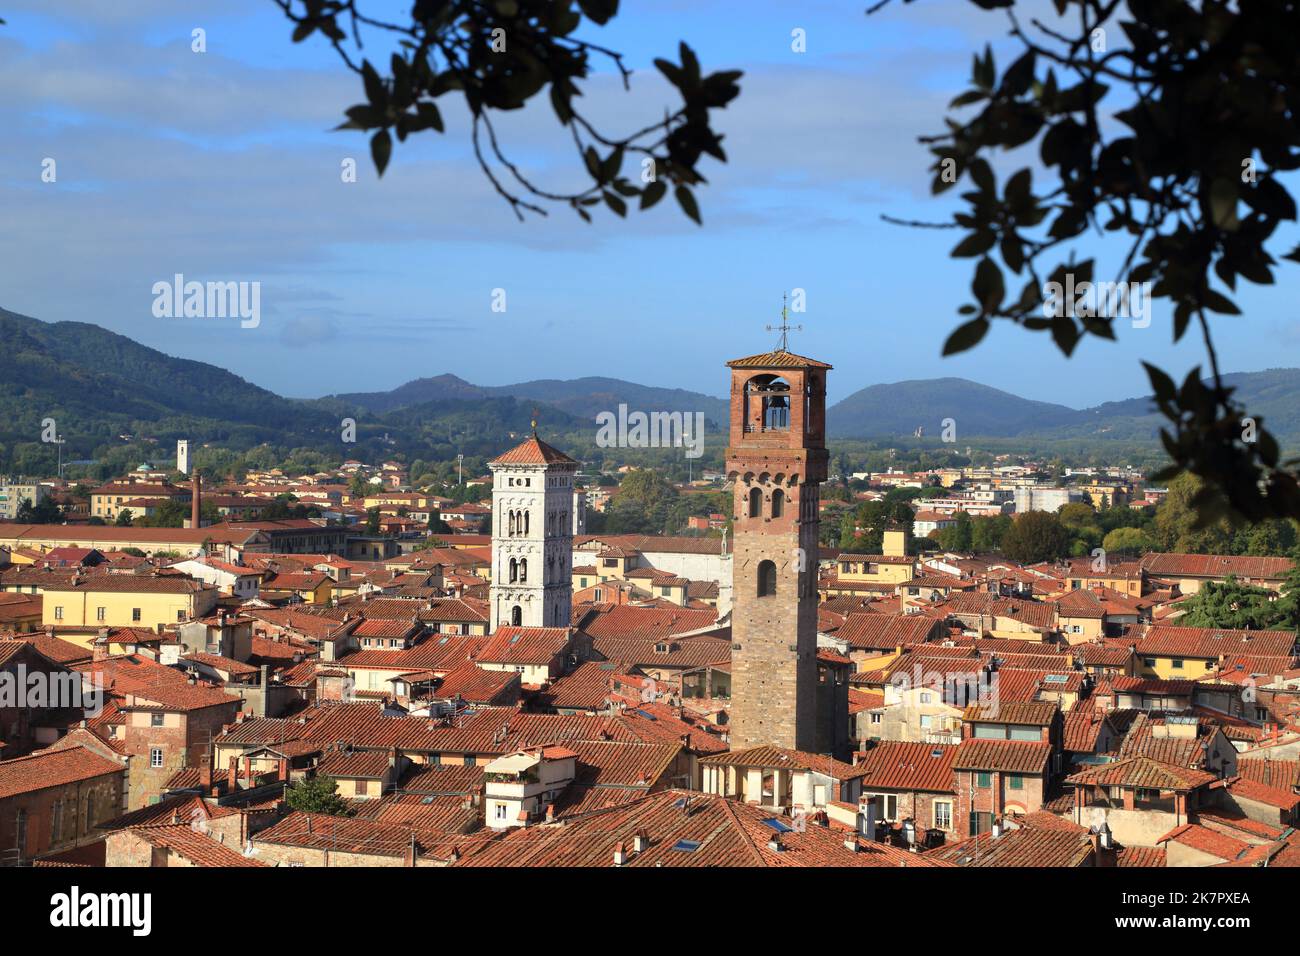 Vista desde Torre Guinigi, Torre Guinigi, Lucca Italia Foto de stock